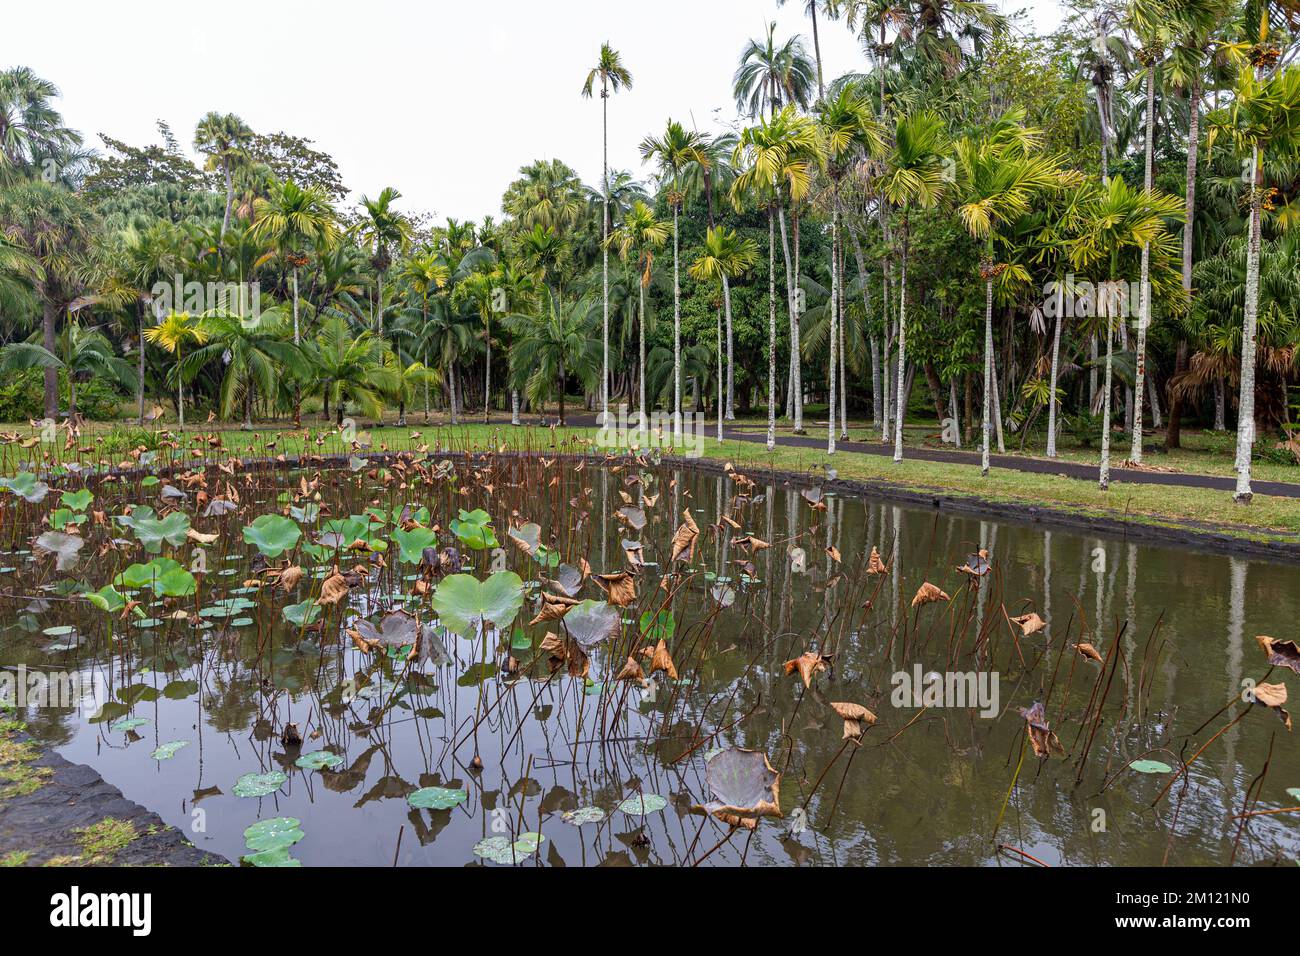 Sir Seewoosagur Ramgoolam Botanical Garden, Teich mit Victoria Amazonica Giant Water Lilies, Mauritius Island, Afrika Stockfoto